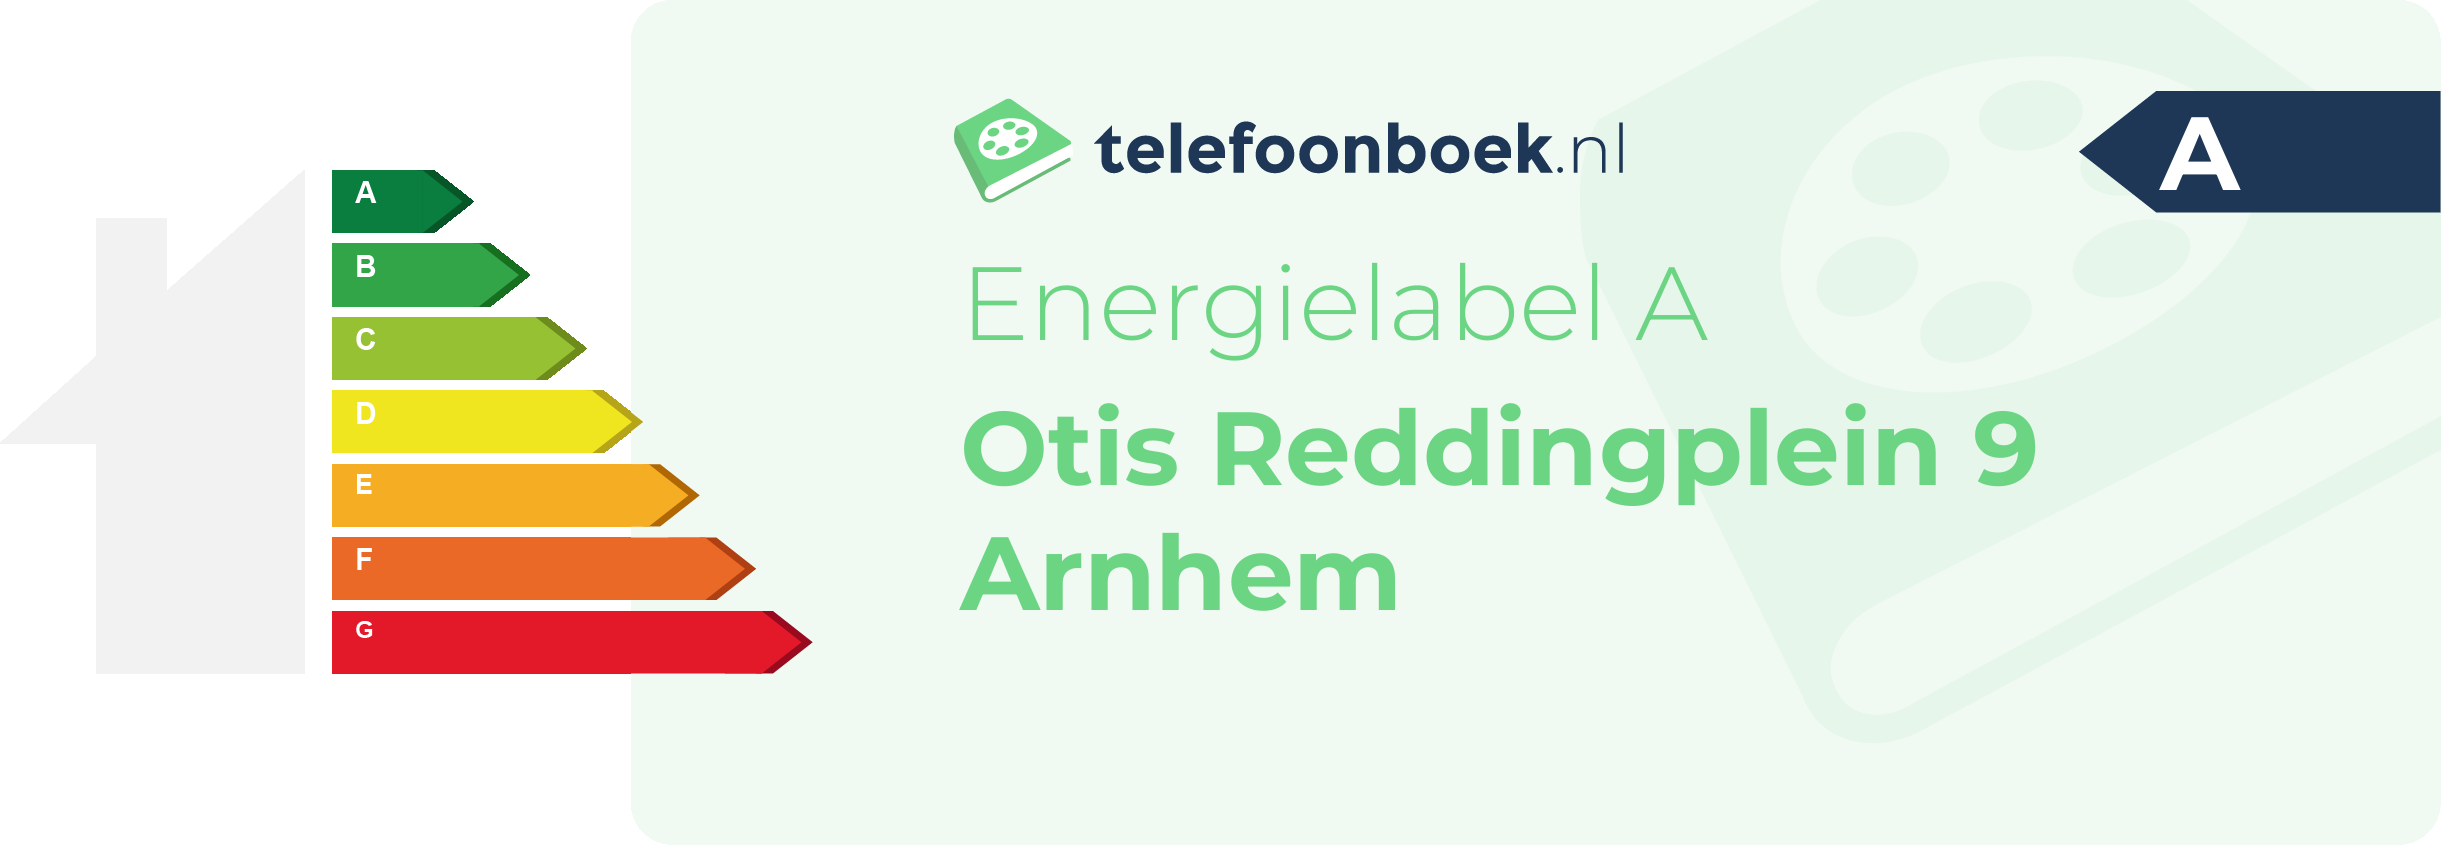 Energielabel Otis Reddingplein 9 Arnhem